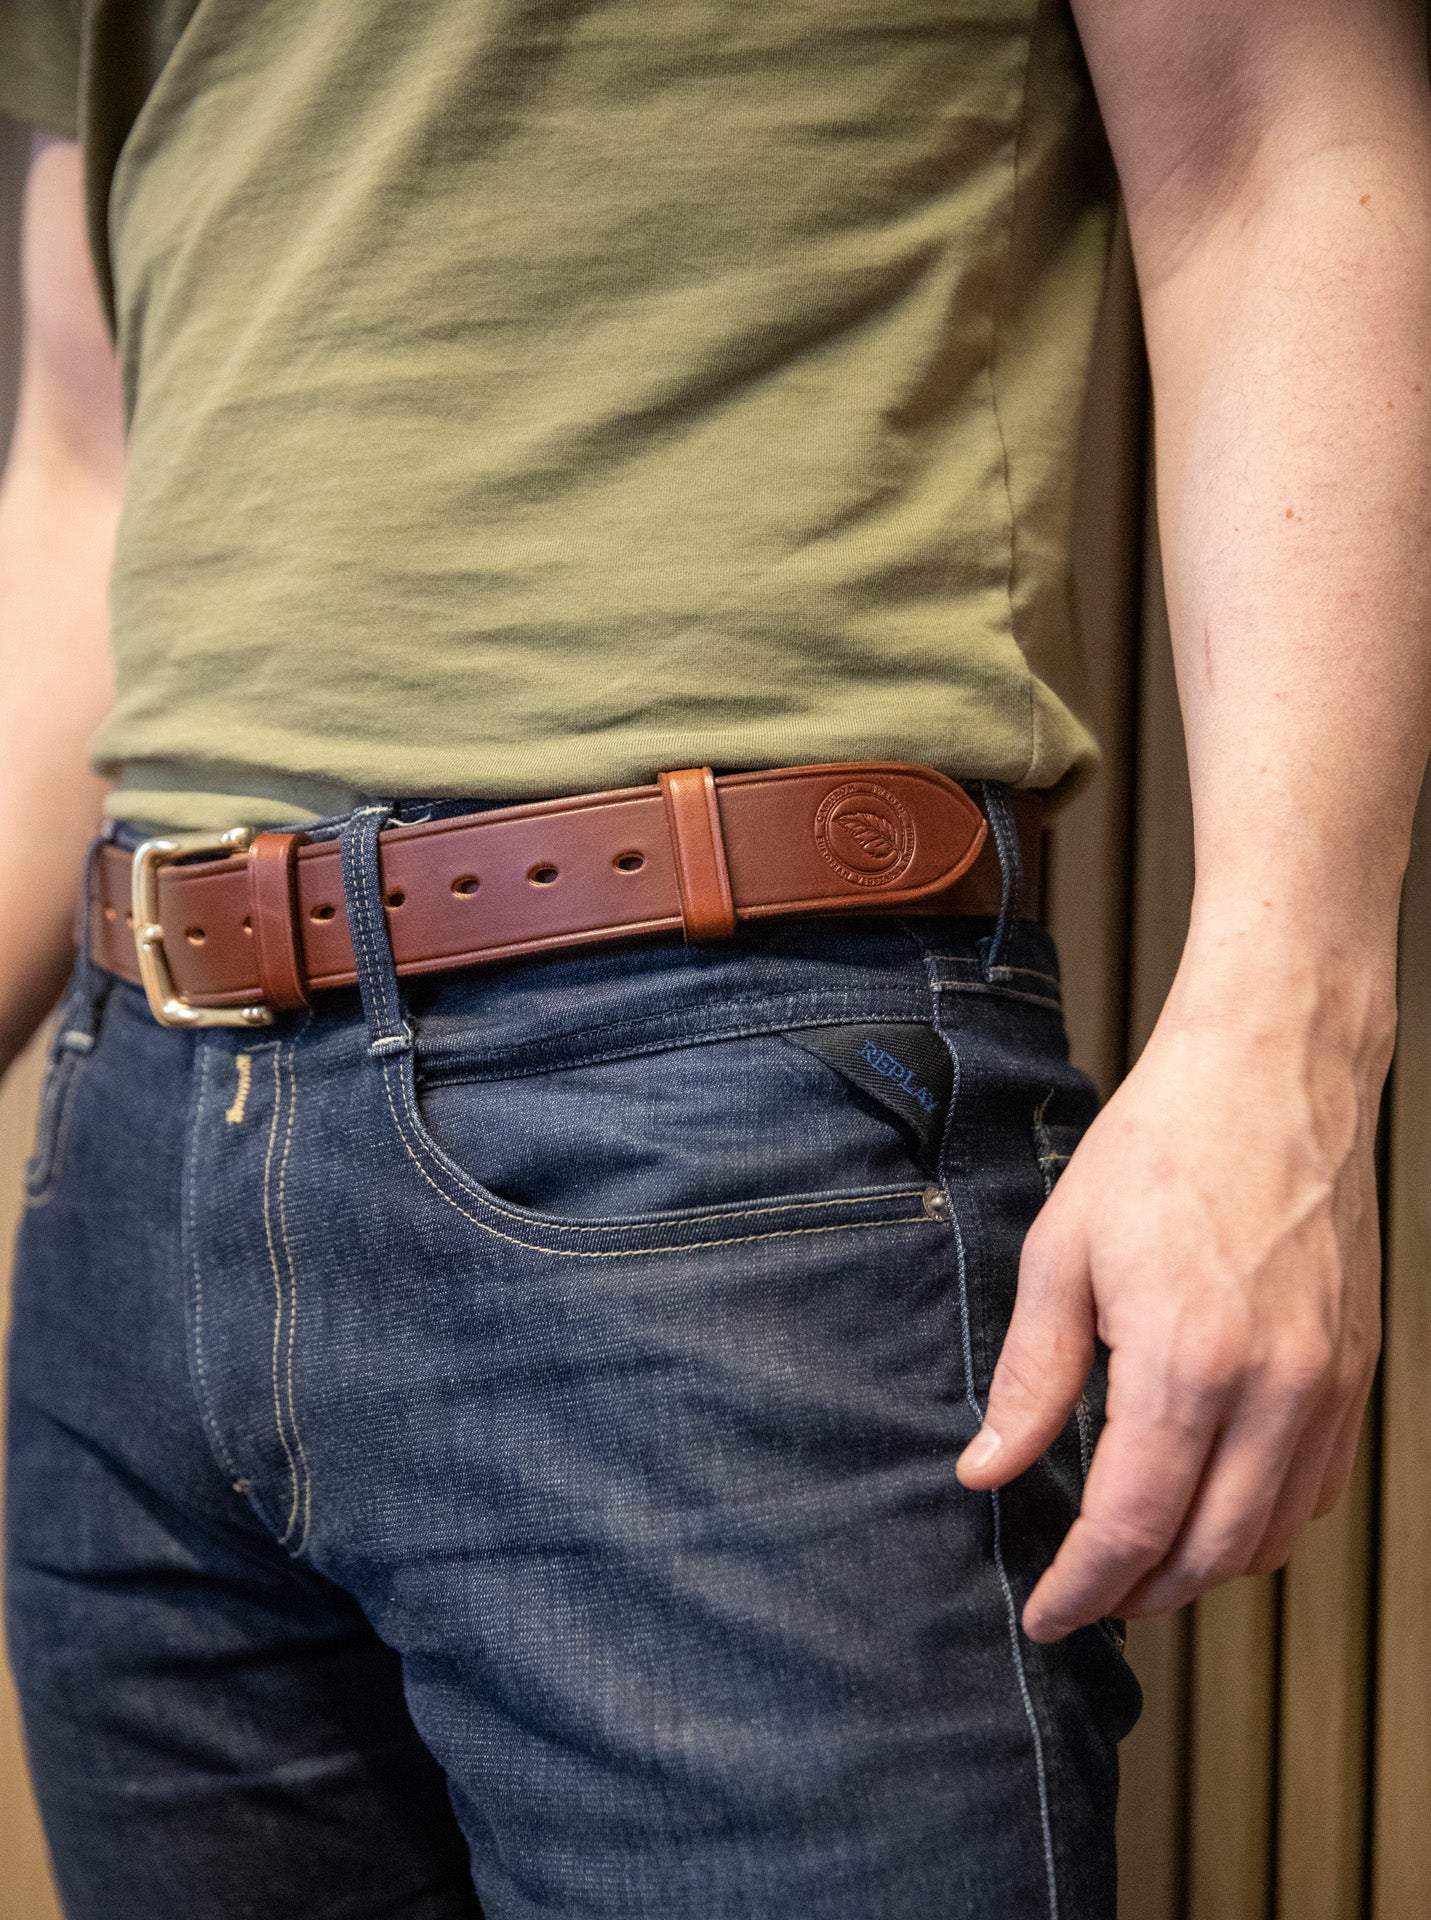 Casström leather belt on a pair of jeans